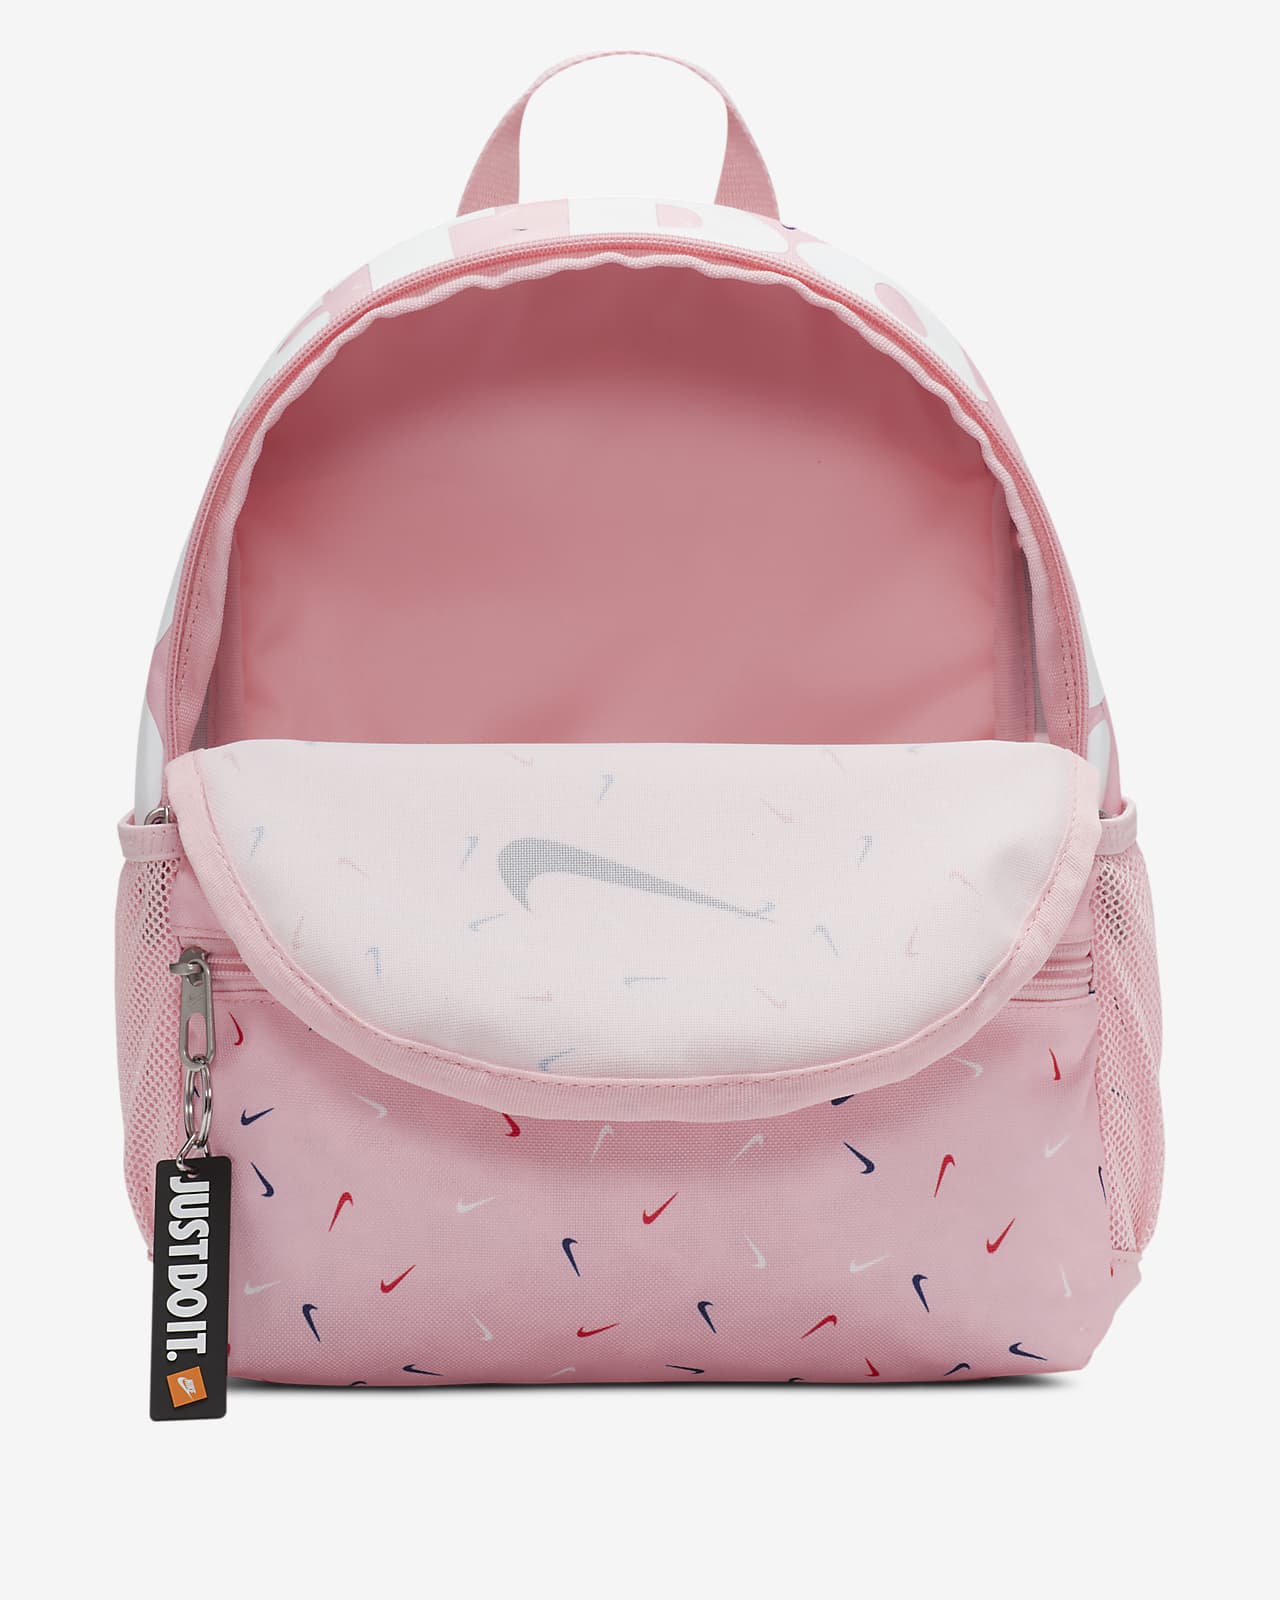 Top Selling Mini Backpacks For Kids And Tweens